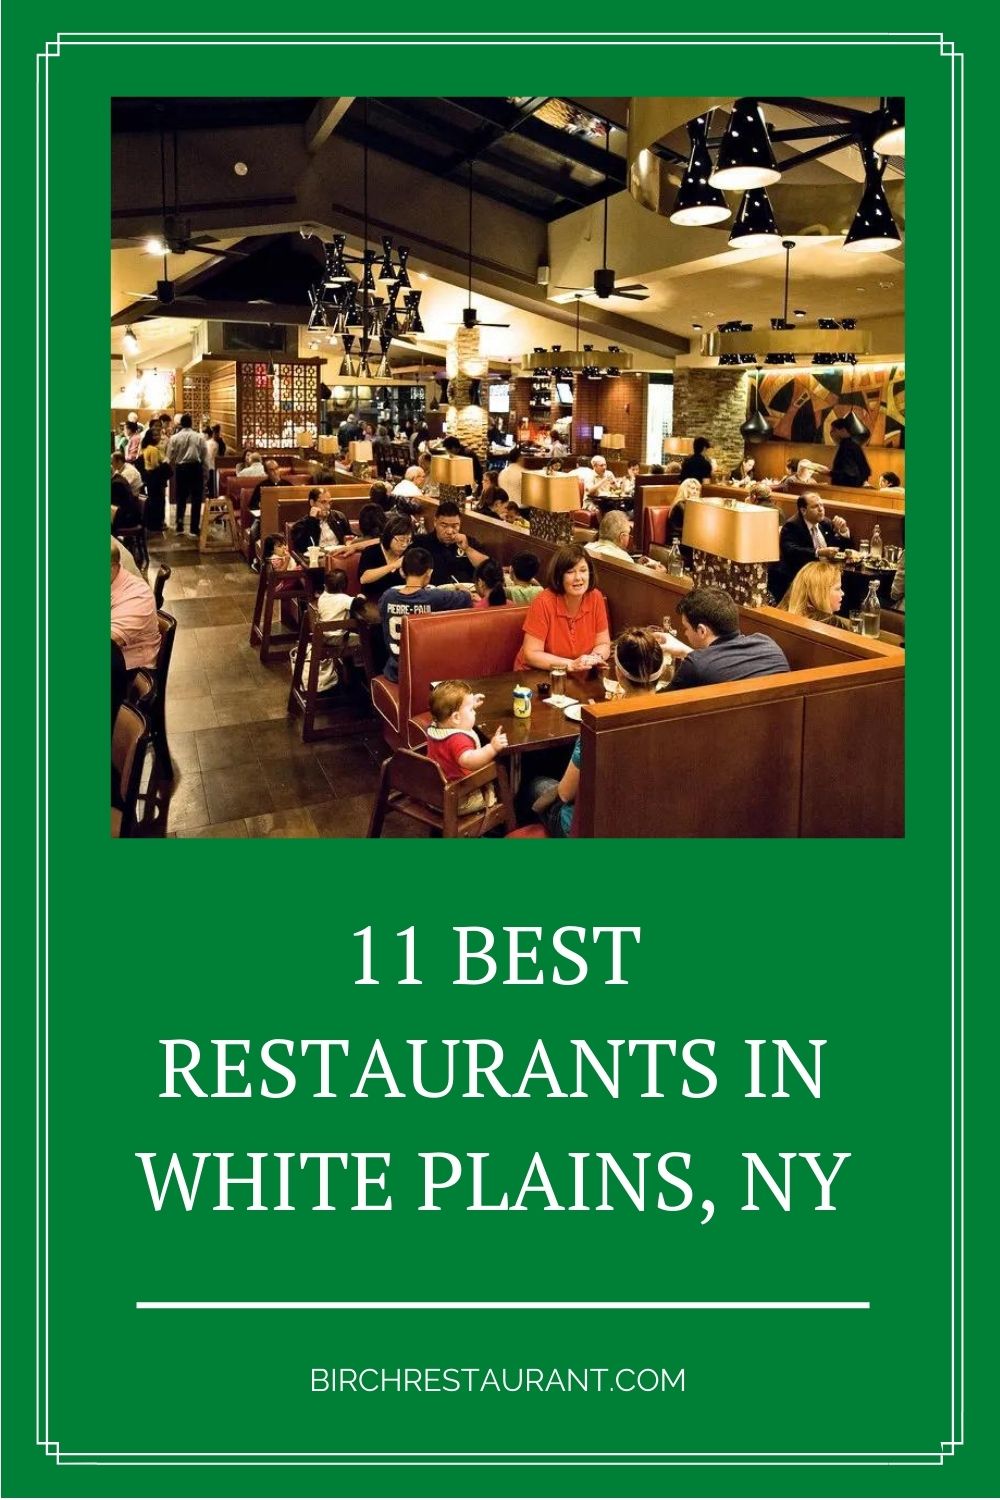 Best Restaurants in White Plains